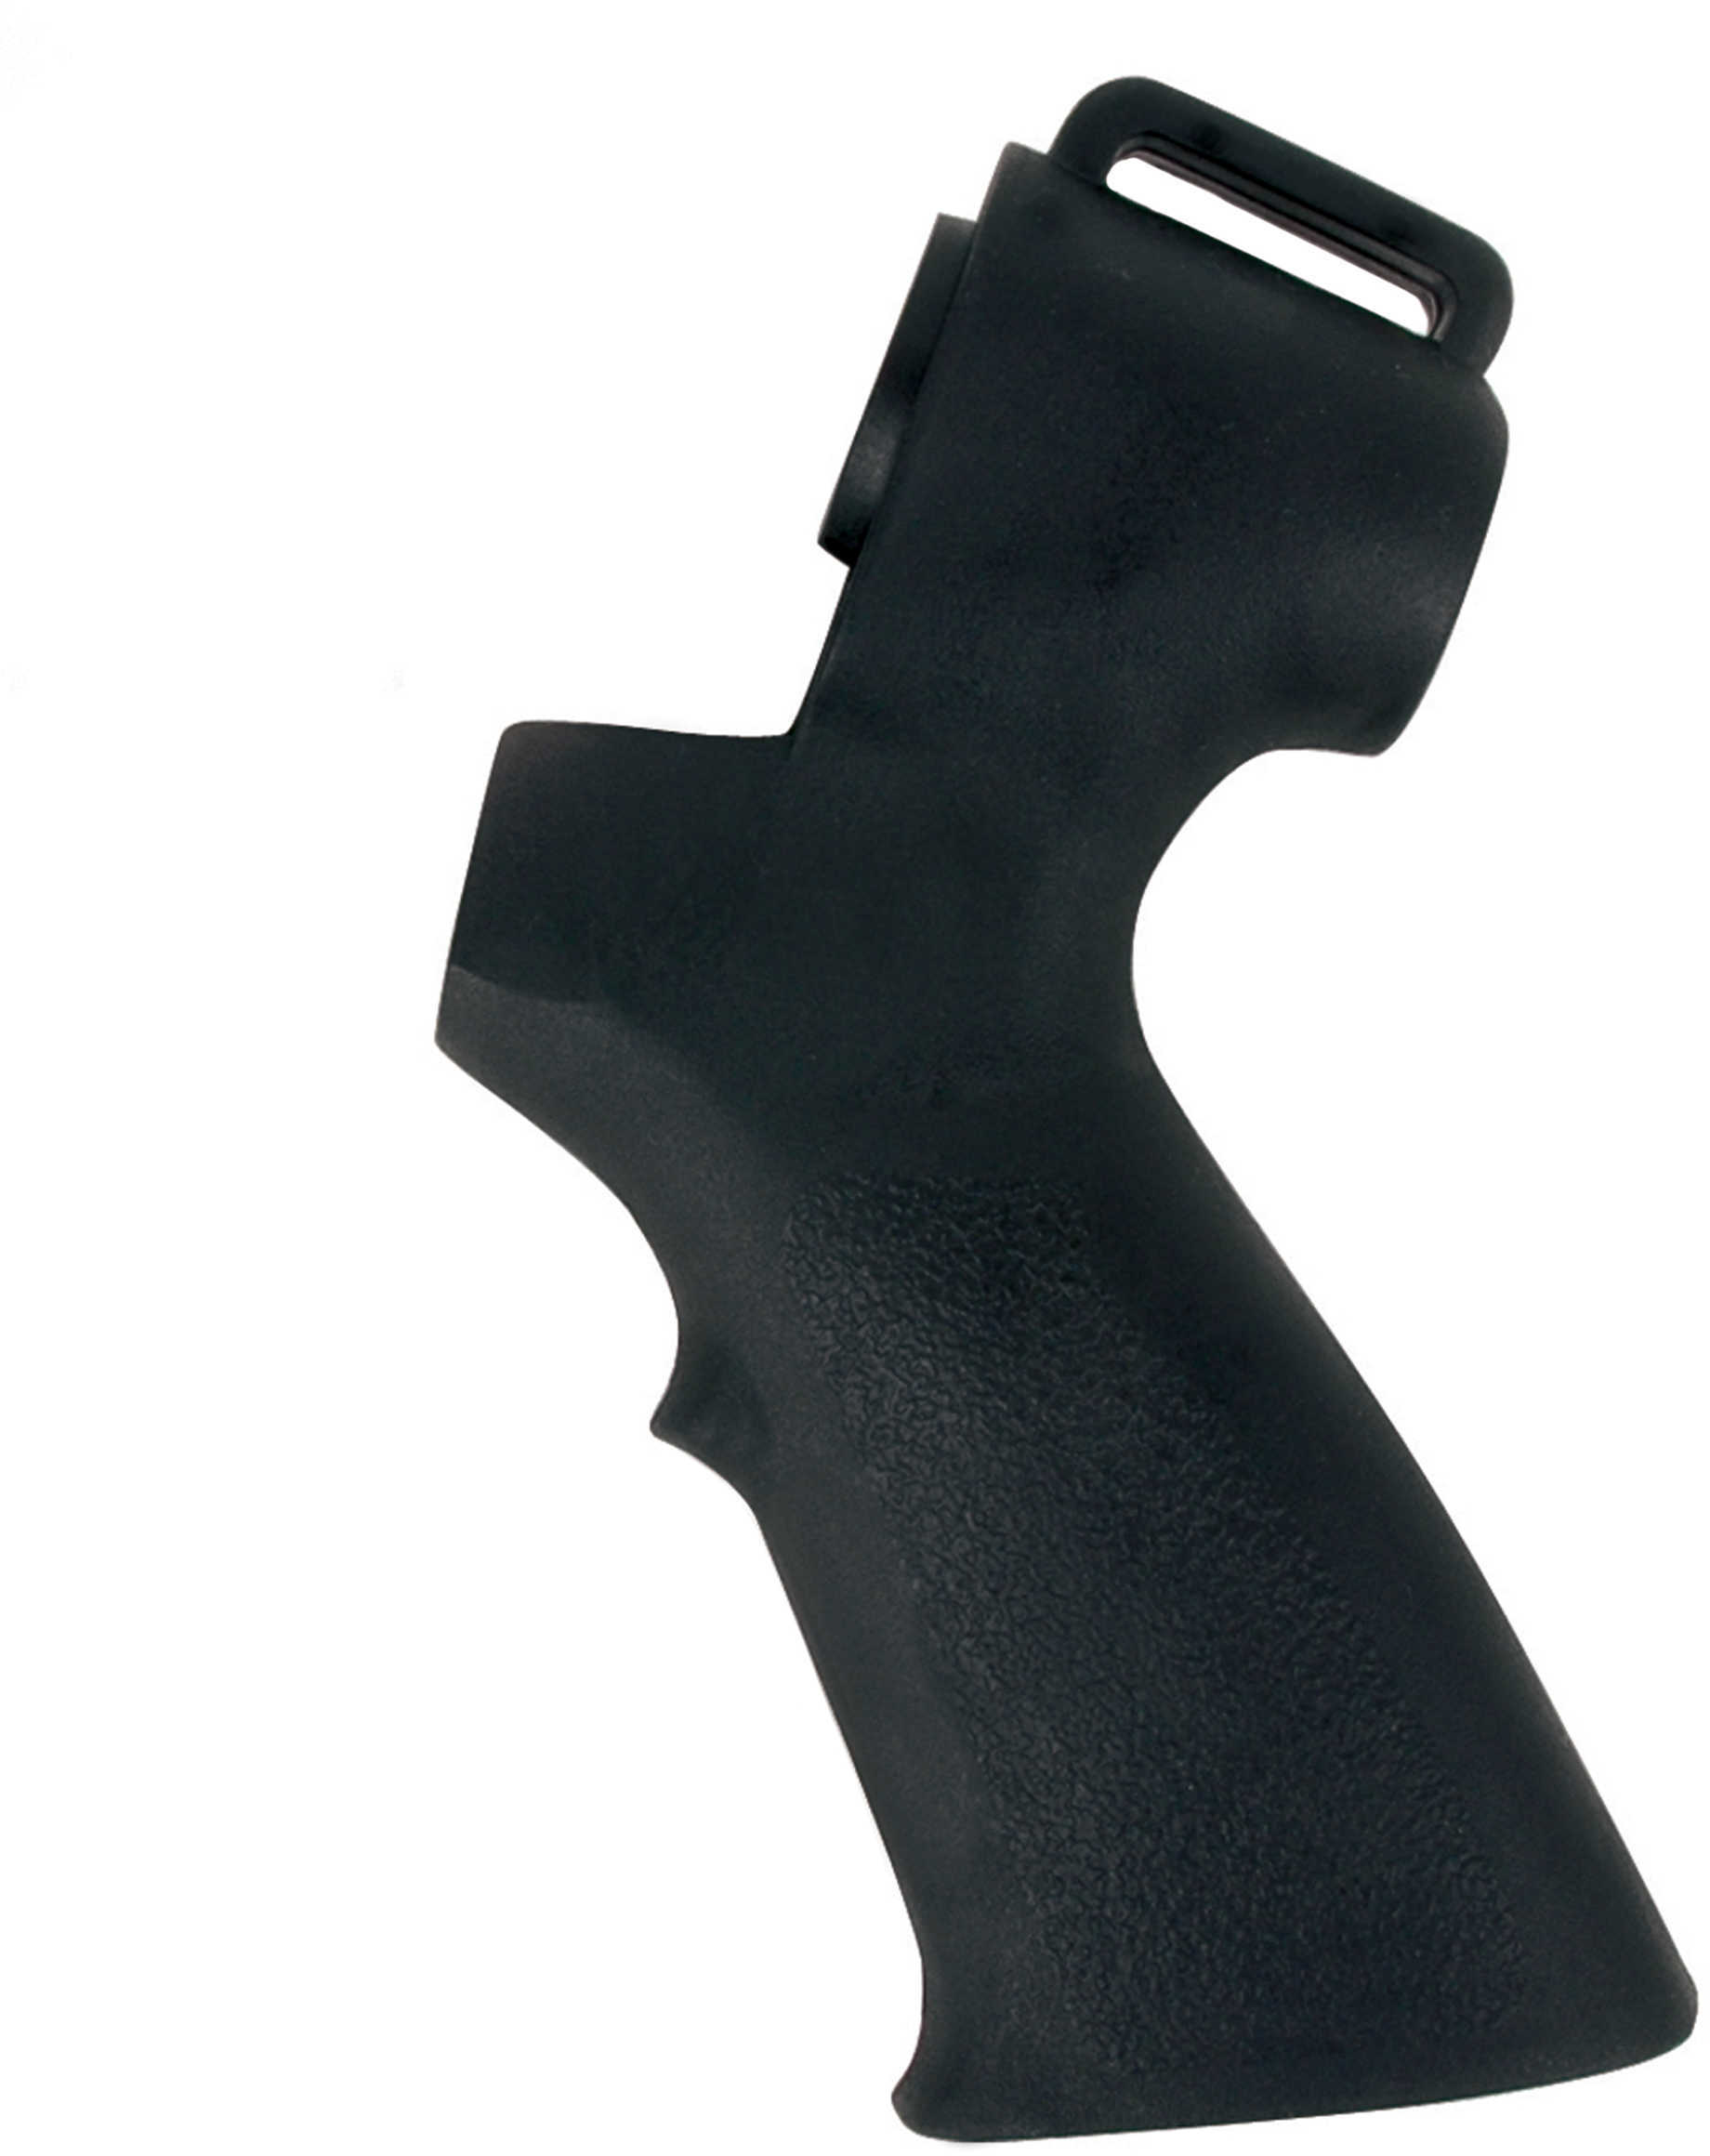 Shotforce Rear Pistol Grip Adapters To Fit 12 Gauge Moss 500/590, Rem 870 & Win 1200/1300 Pump shotguns Ergonomic, doubl